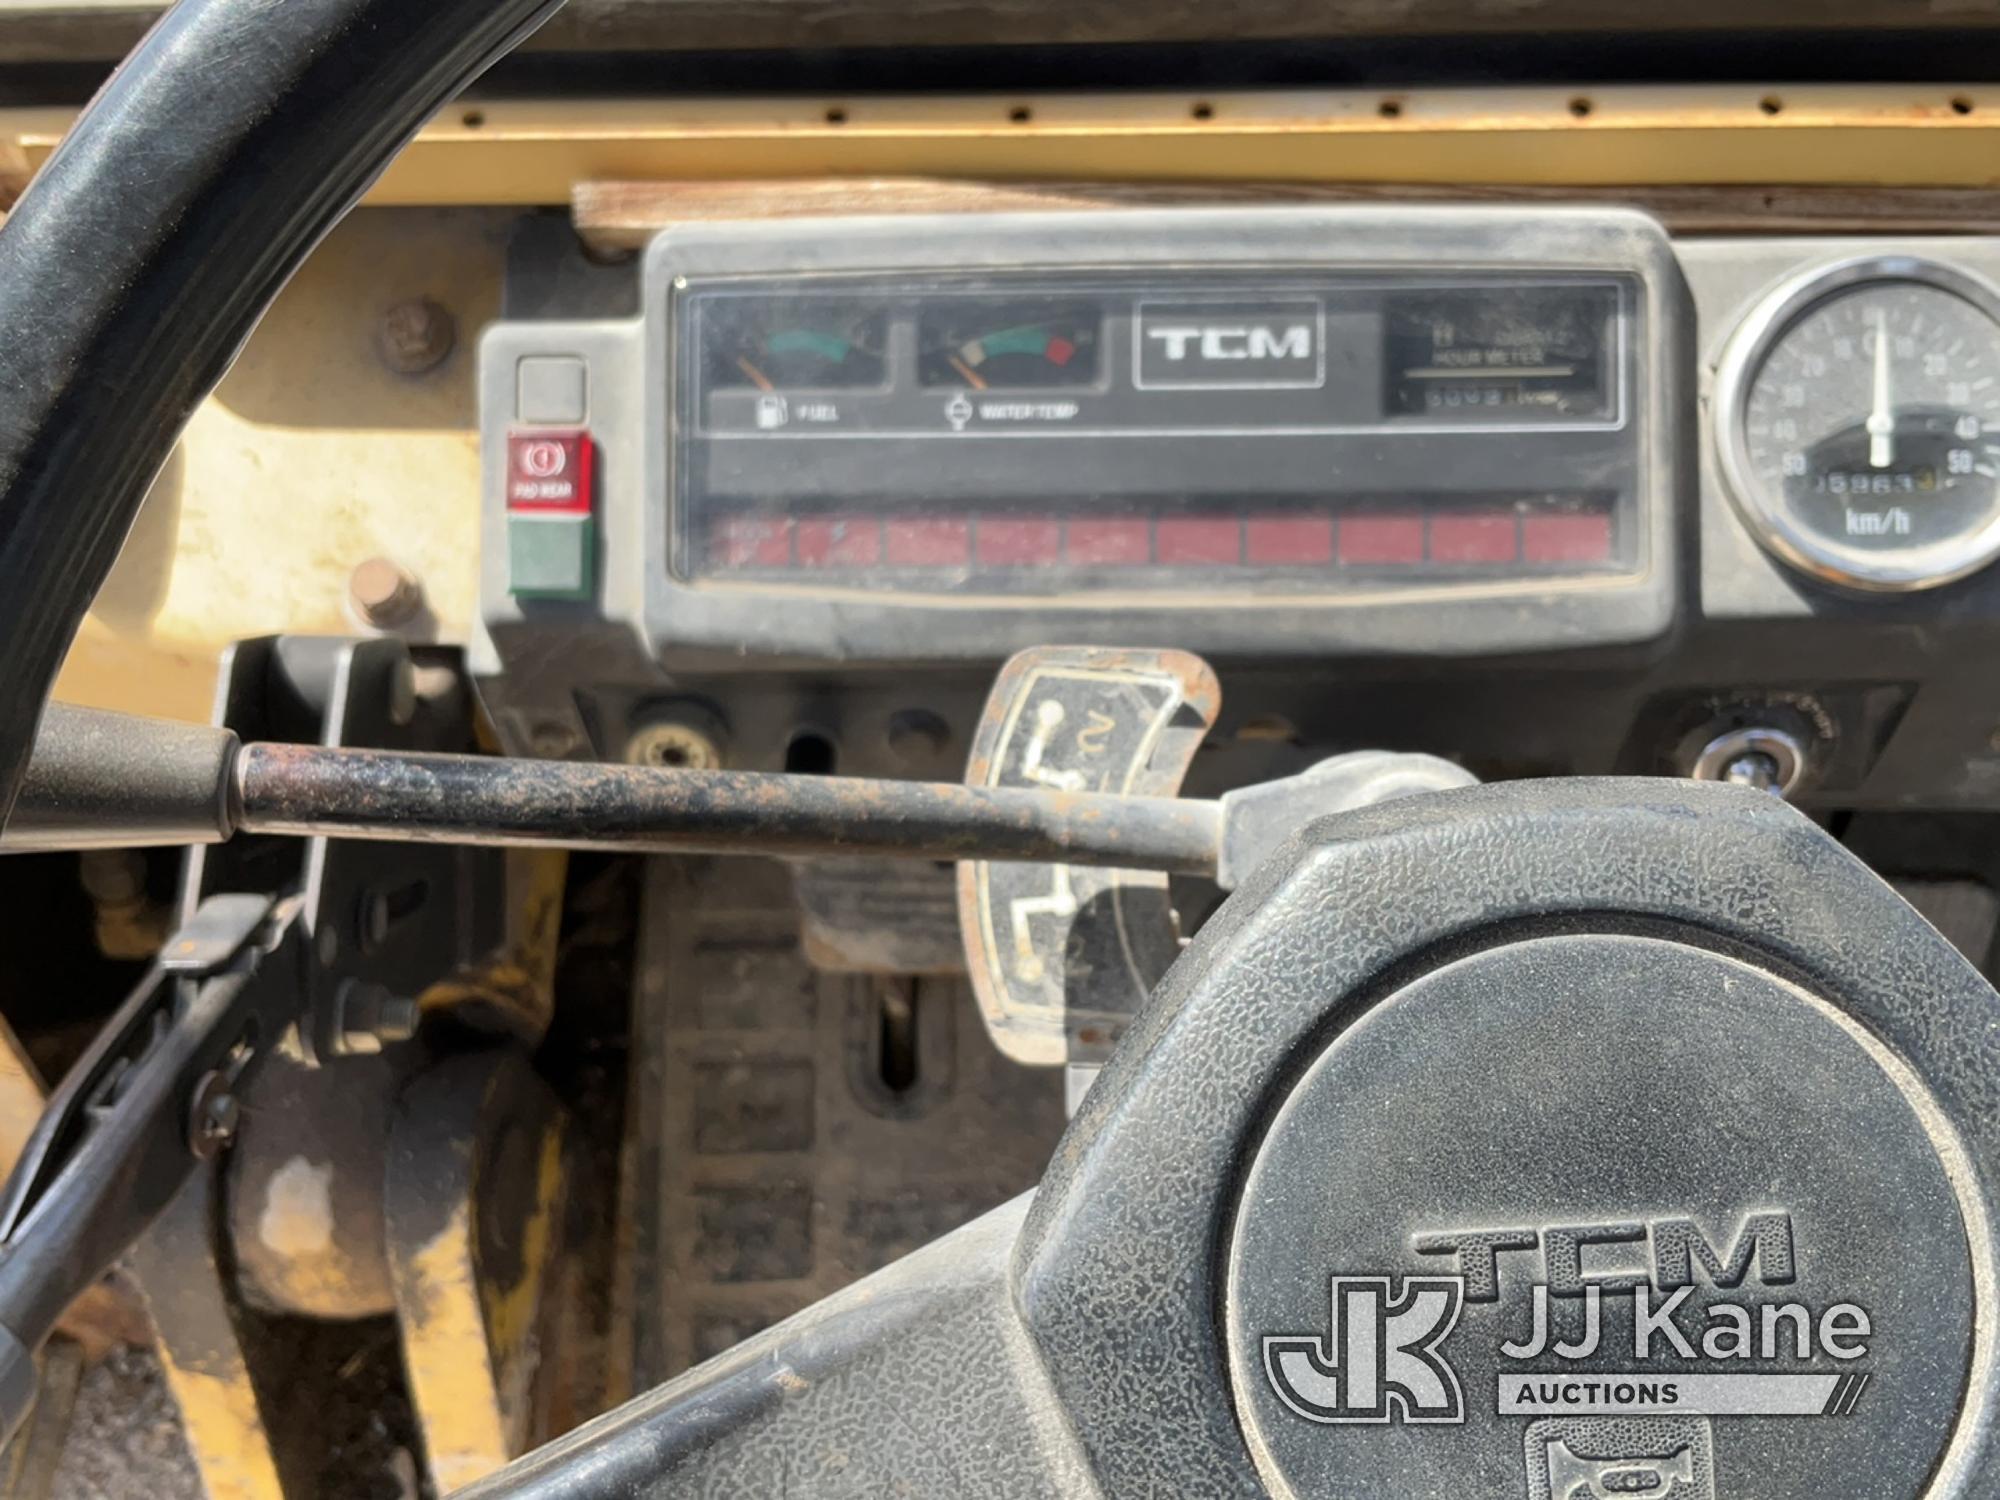 (Charlotte, MI) 1989 TCM FD100Z Rubber Tired Forklift Runs, Moves, Operates